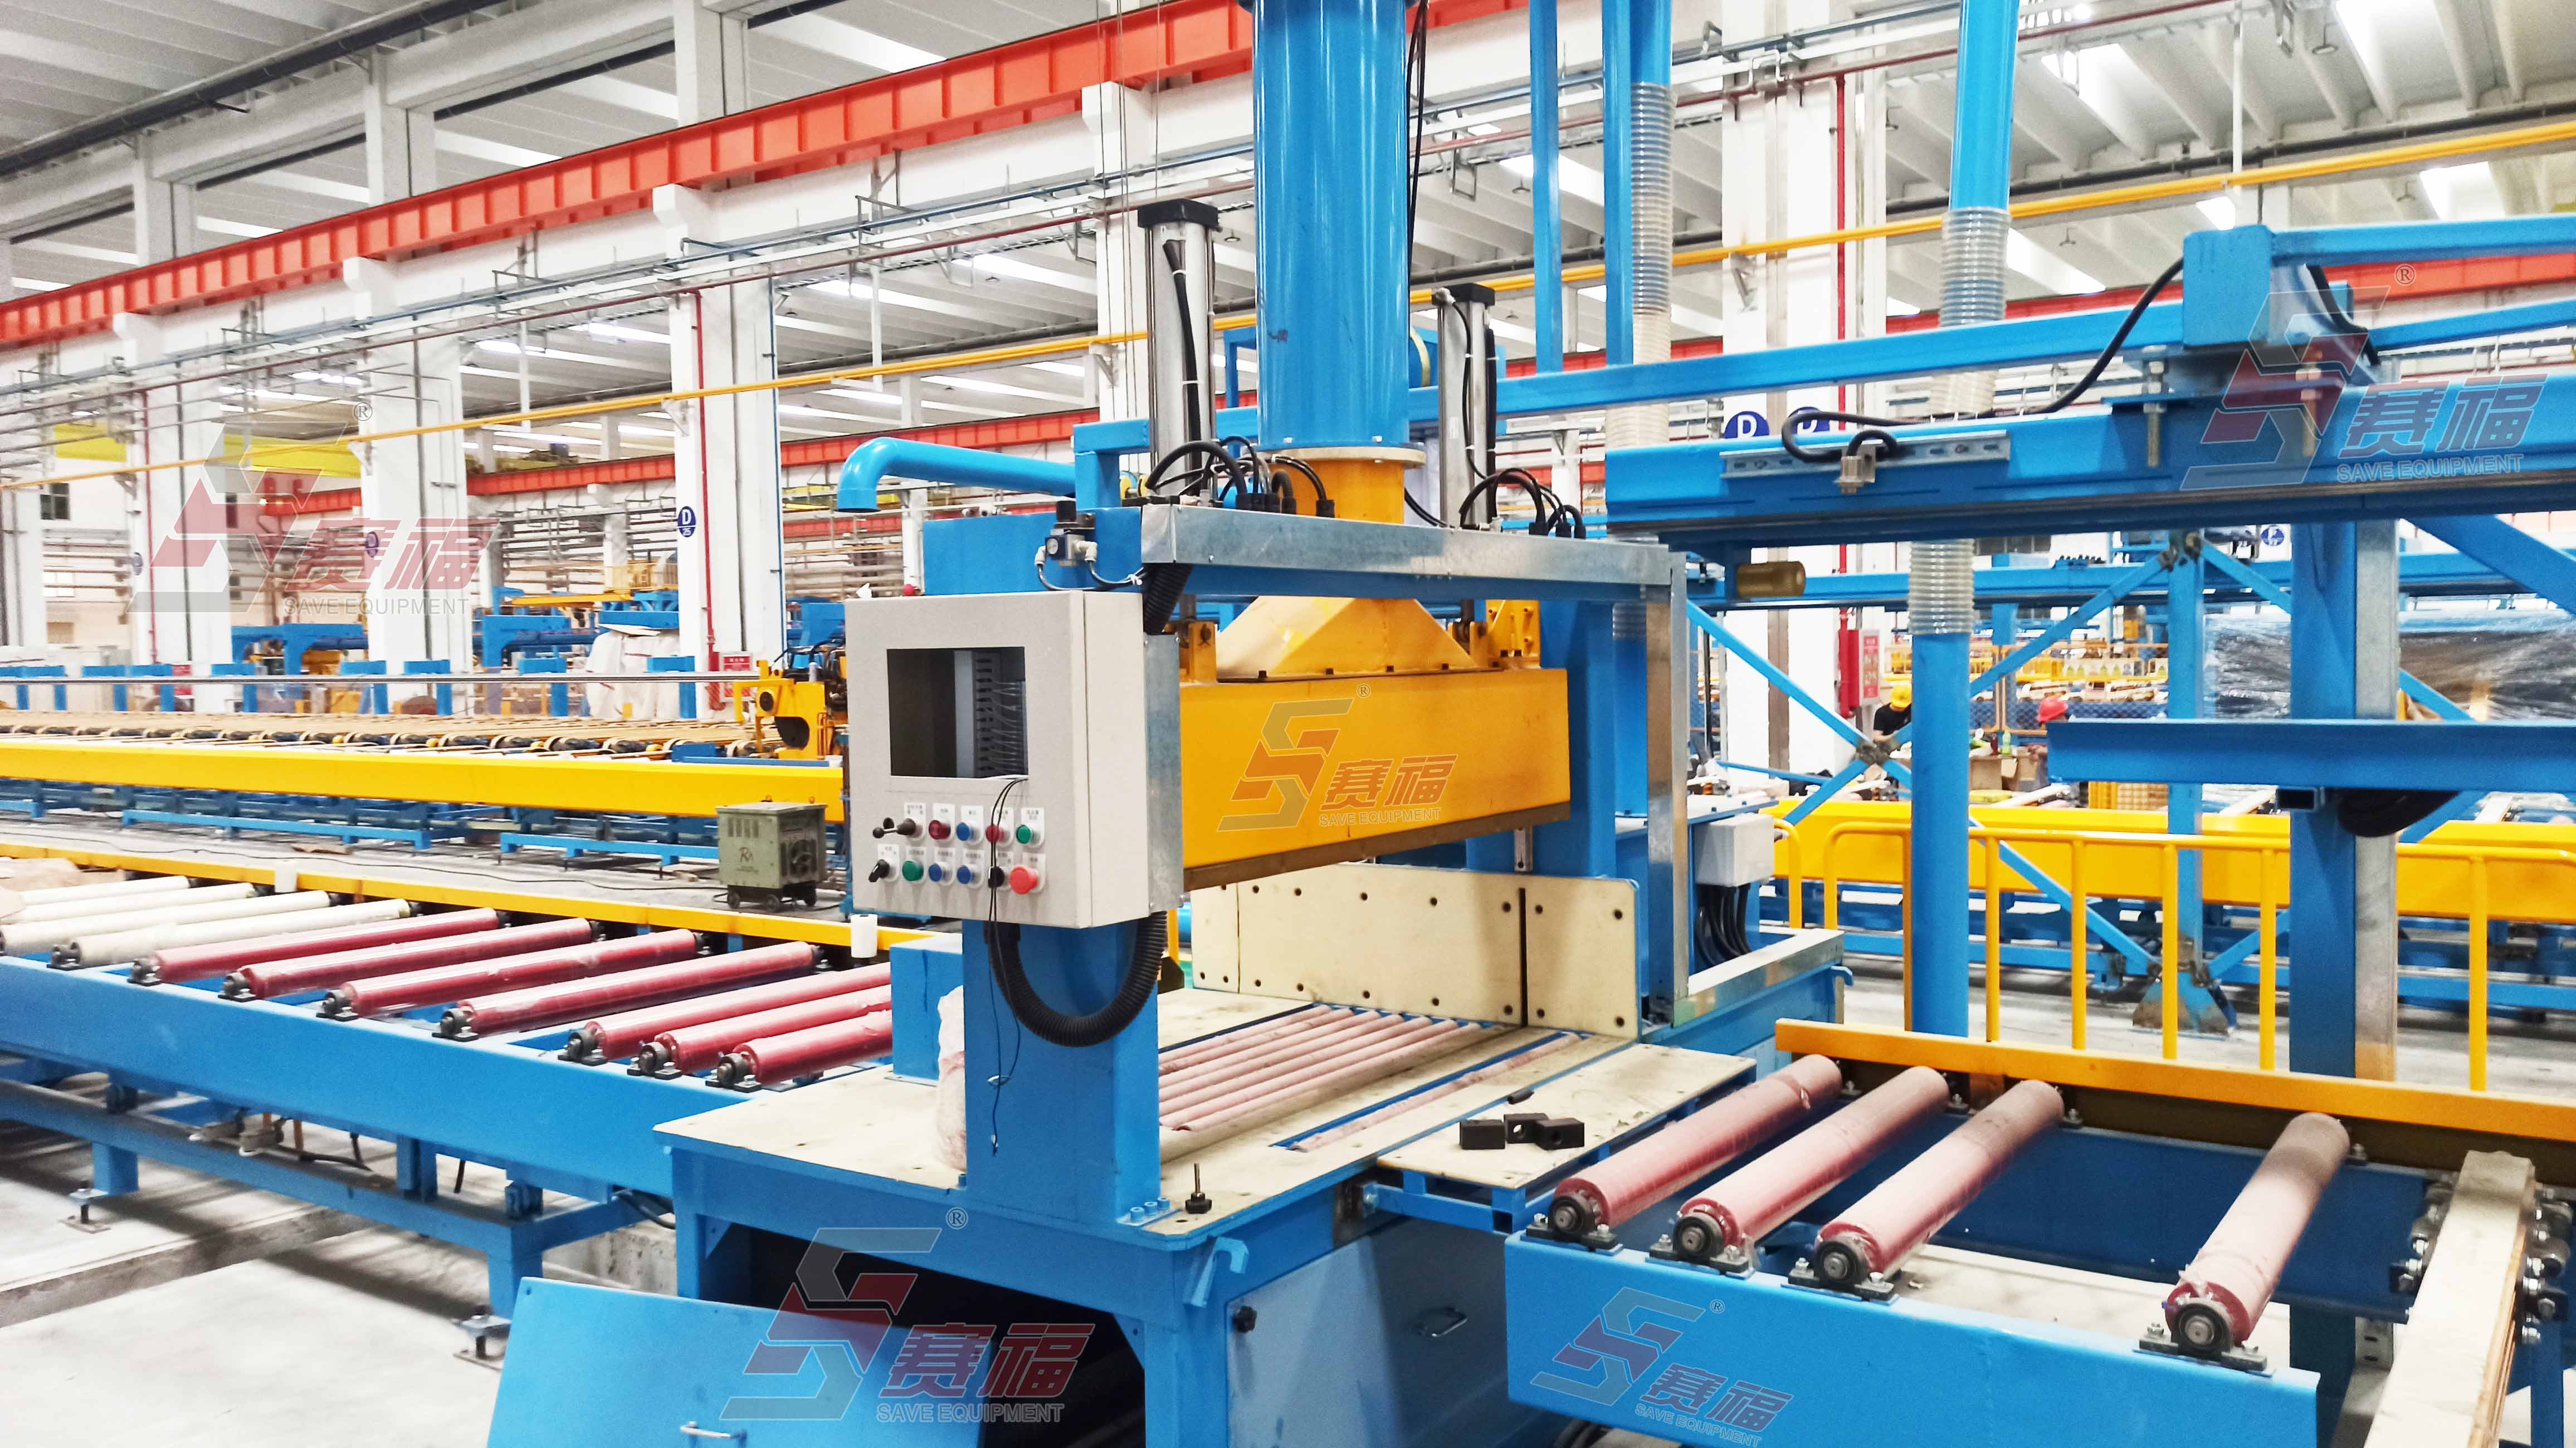 Shangdong HuaJian Aluminium ordered 4360-ton quick cooling quenching system.